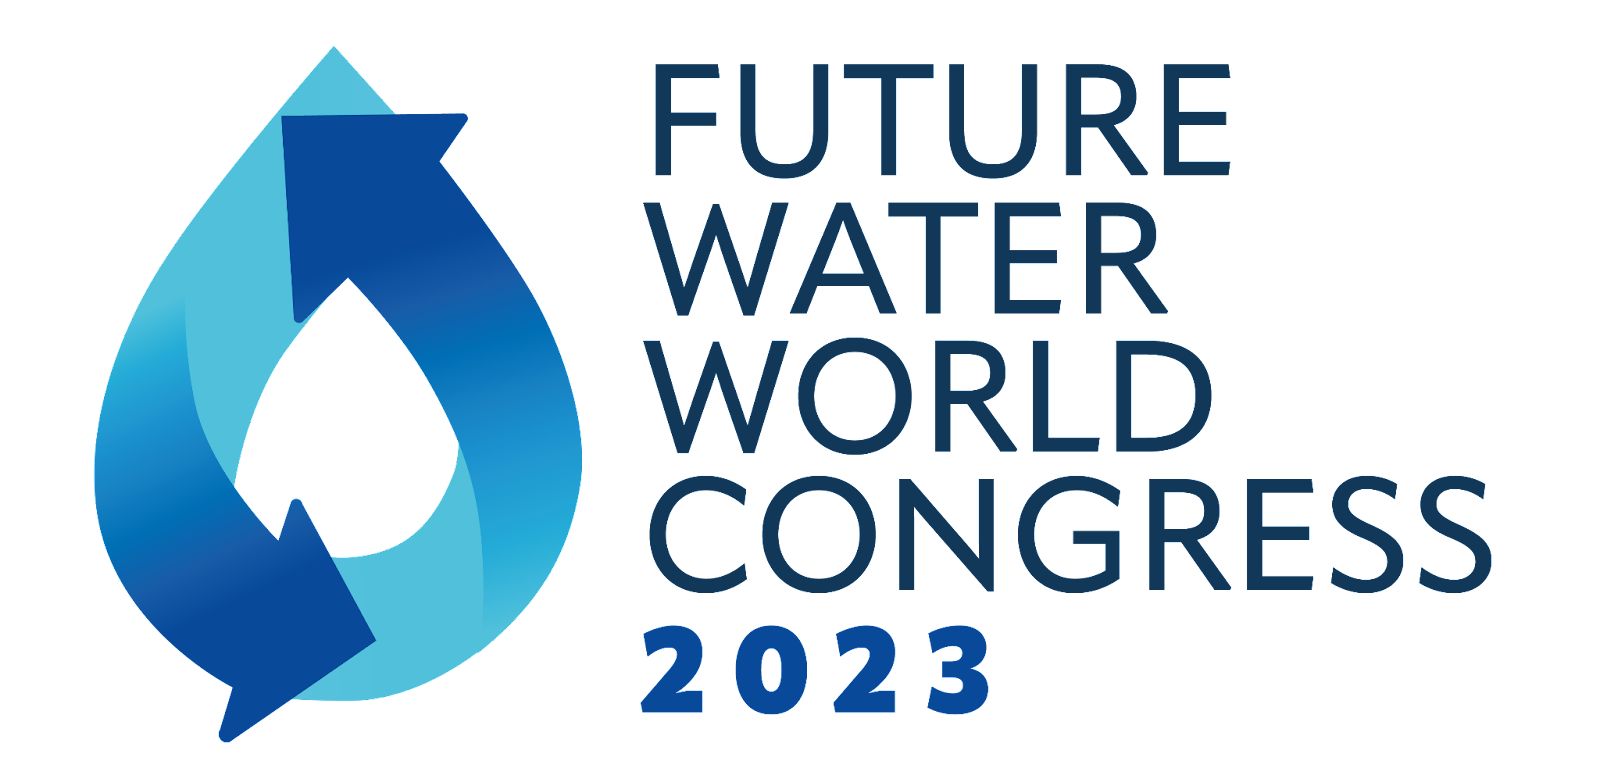 The Future Water World Congress 2023